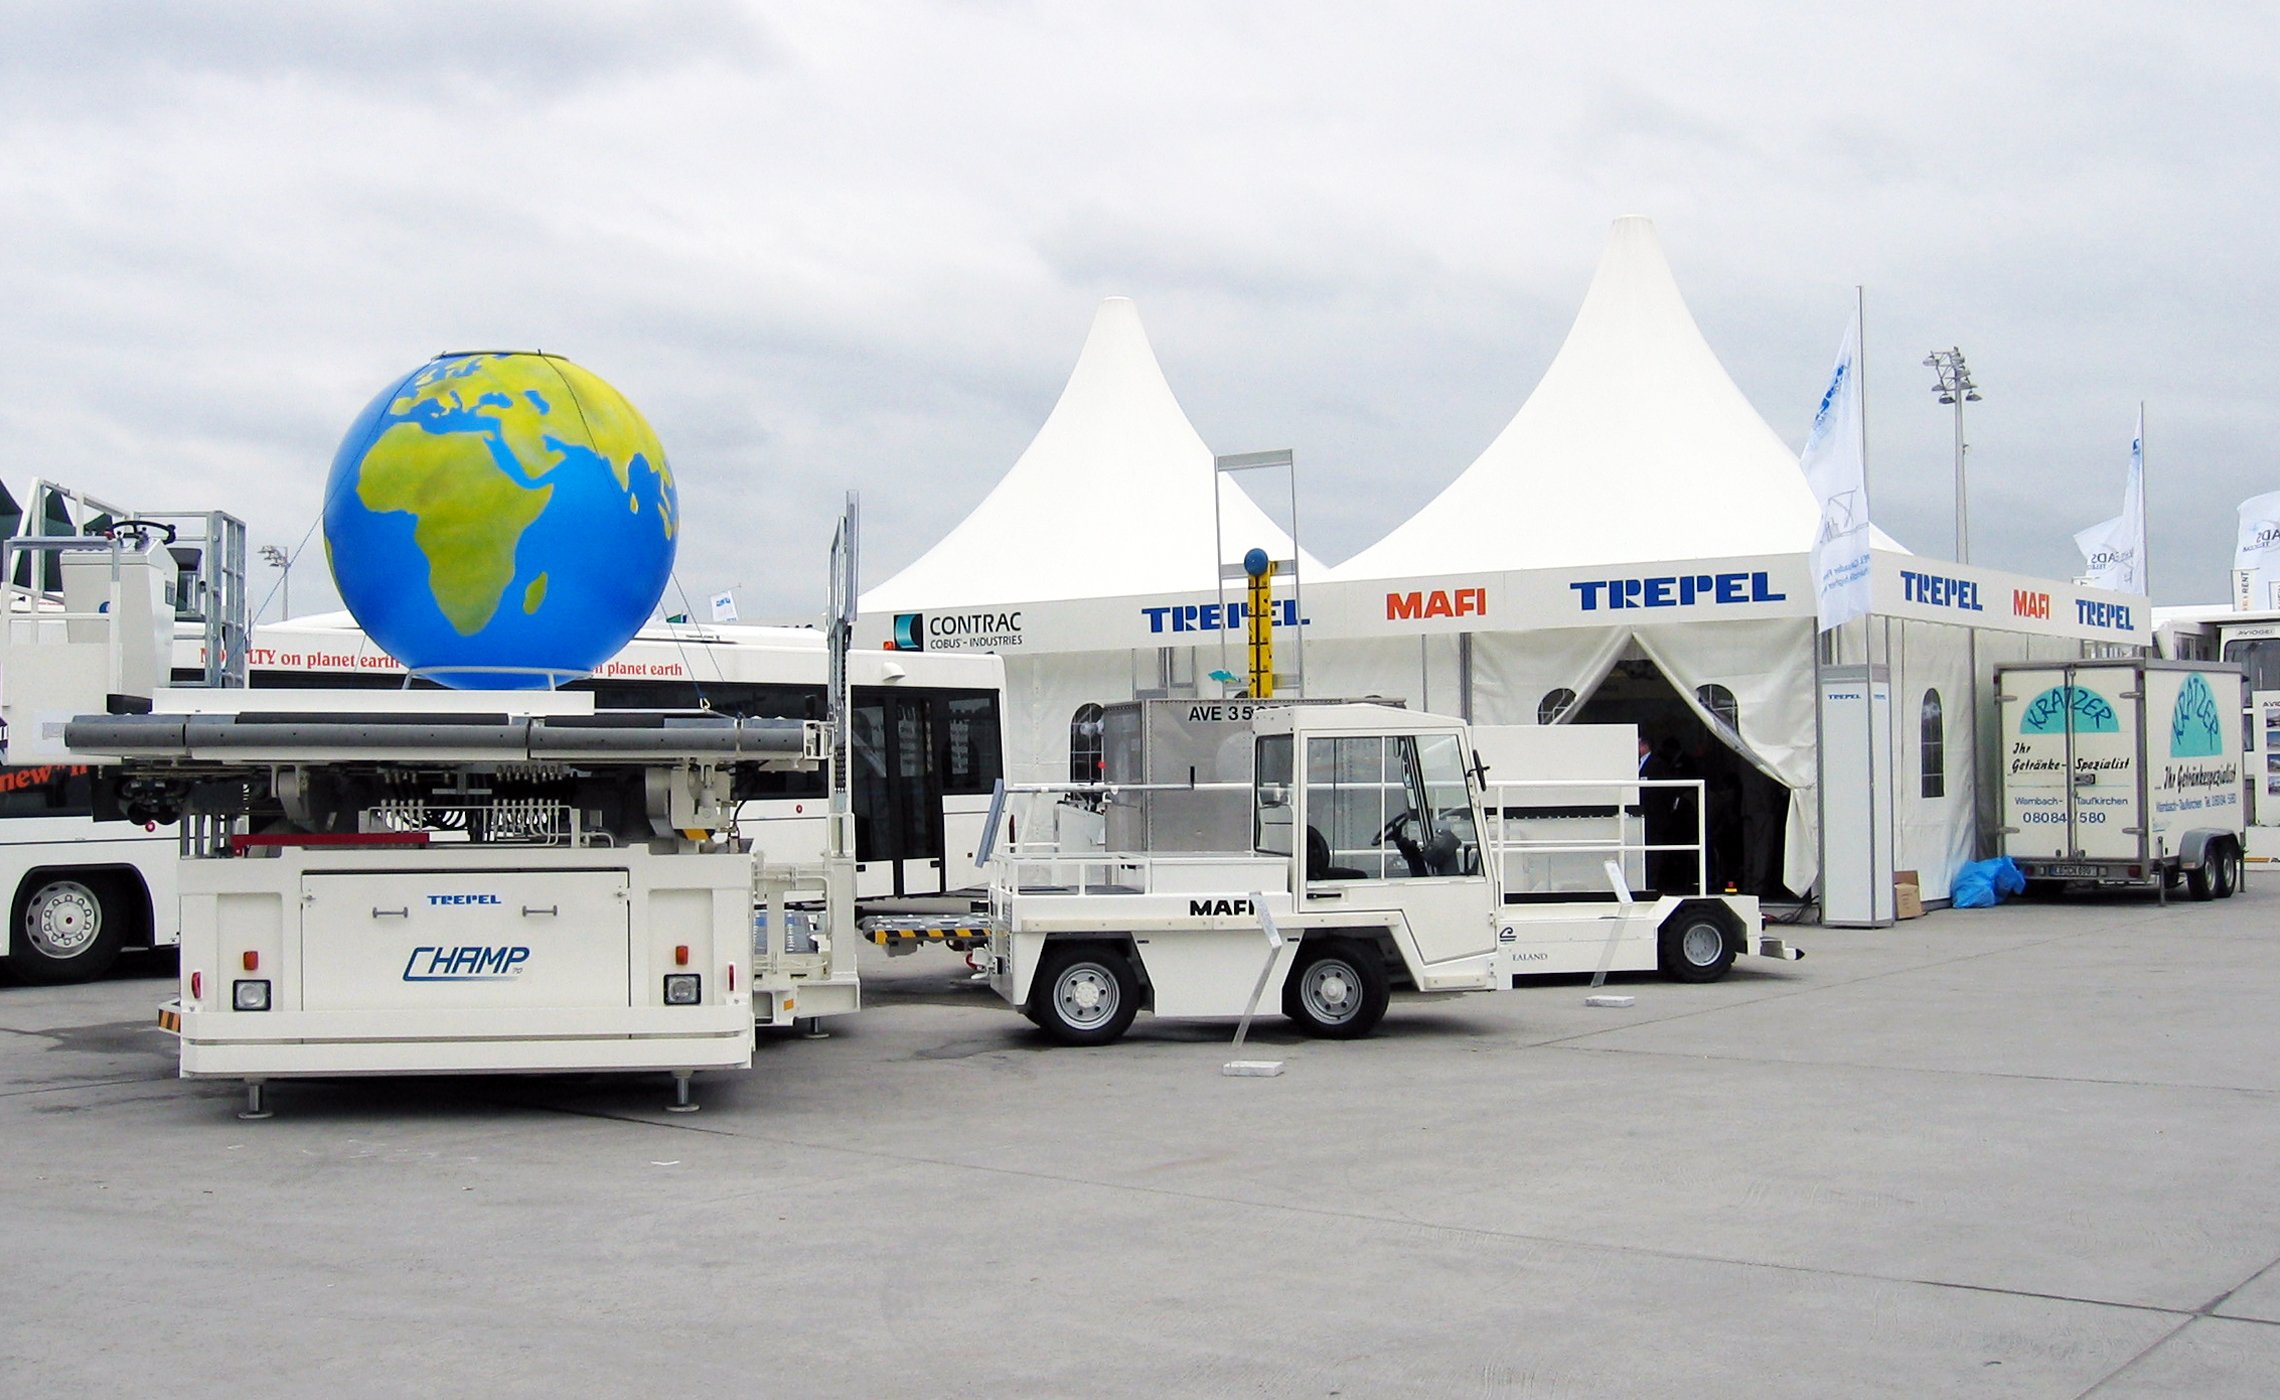 TREPEL Airport Equipment - History 2003